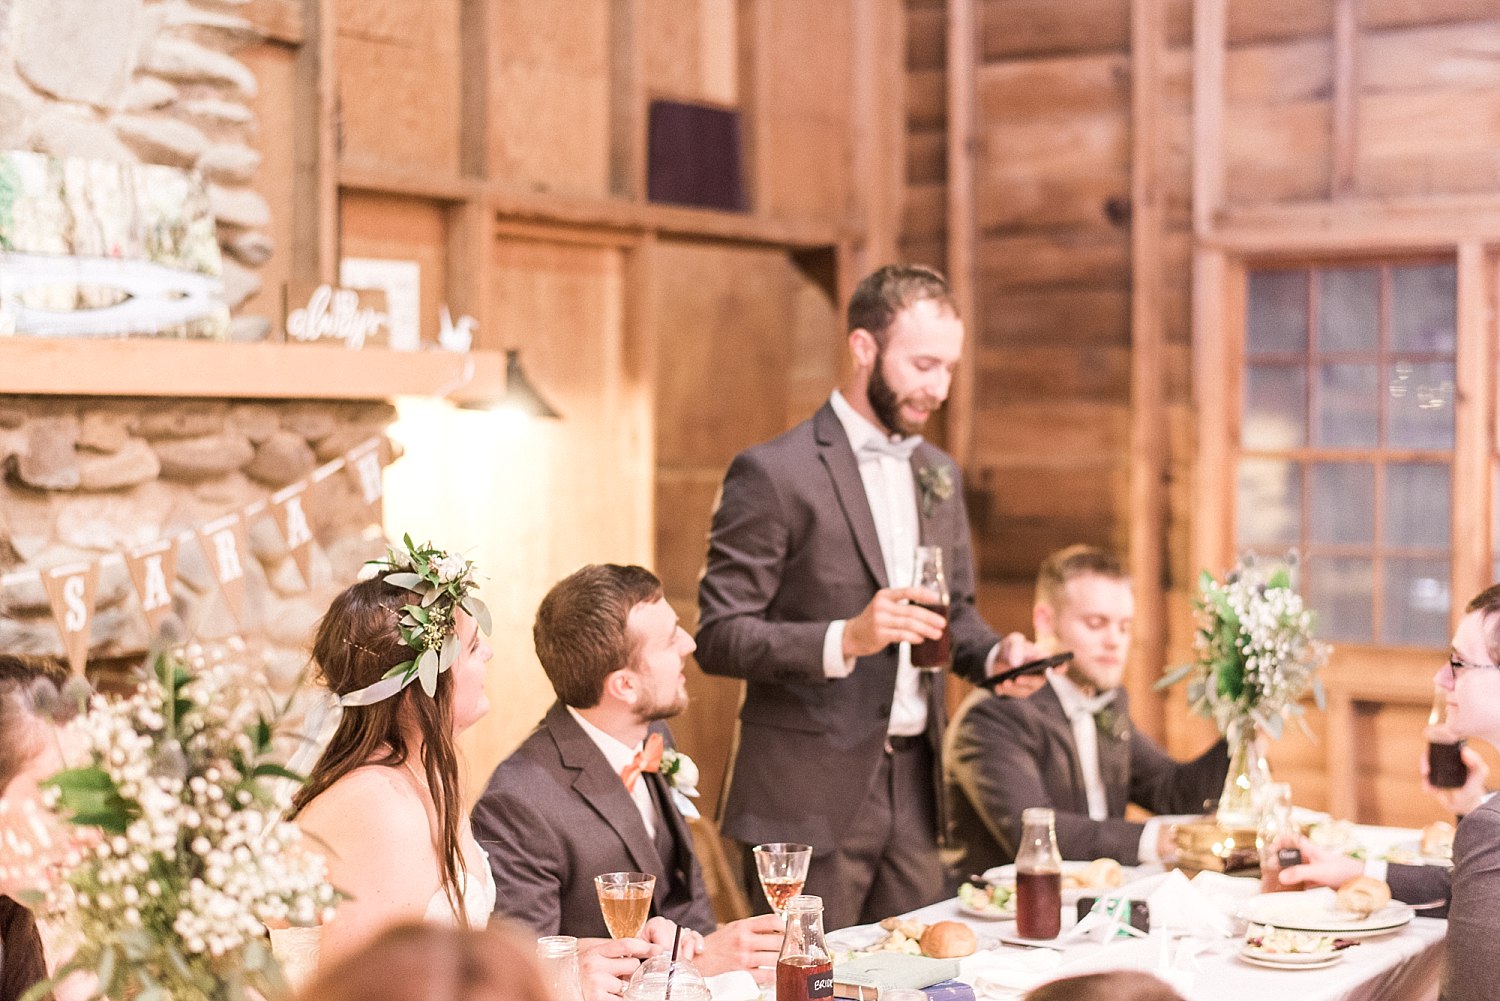 Spence Cabin Wedding Venue in the Smoky Mountains_Sarah&Josh